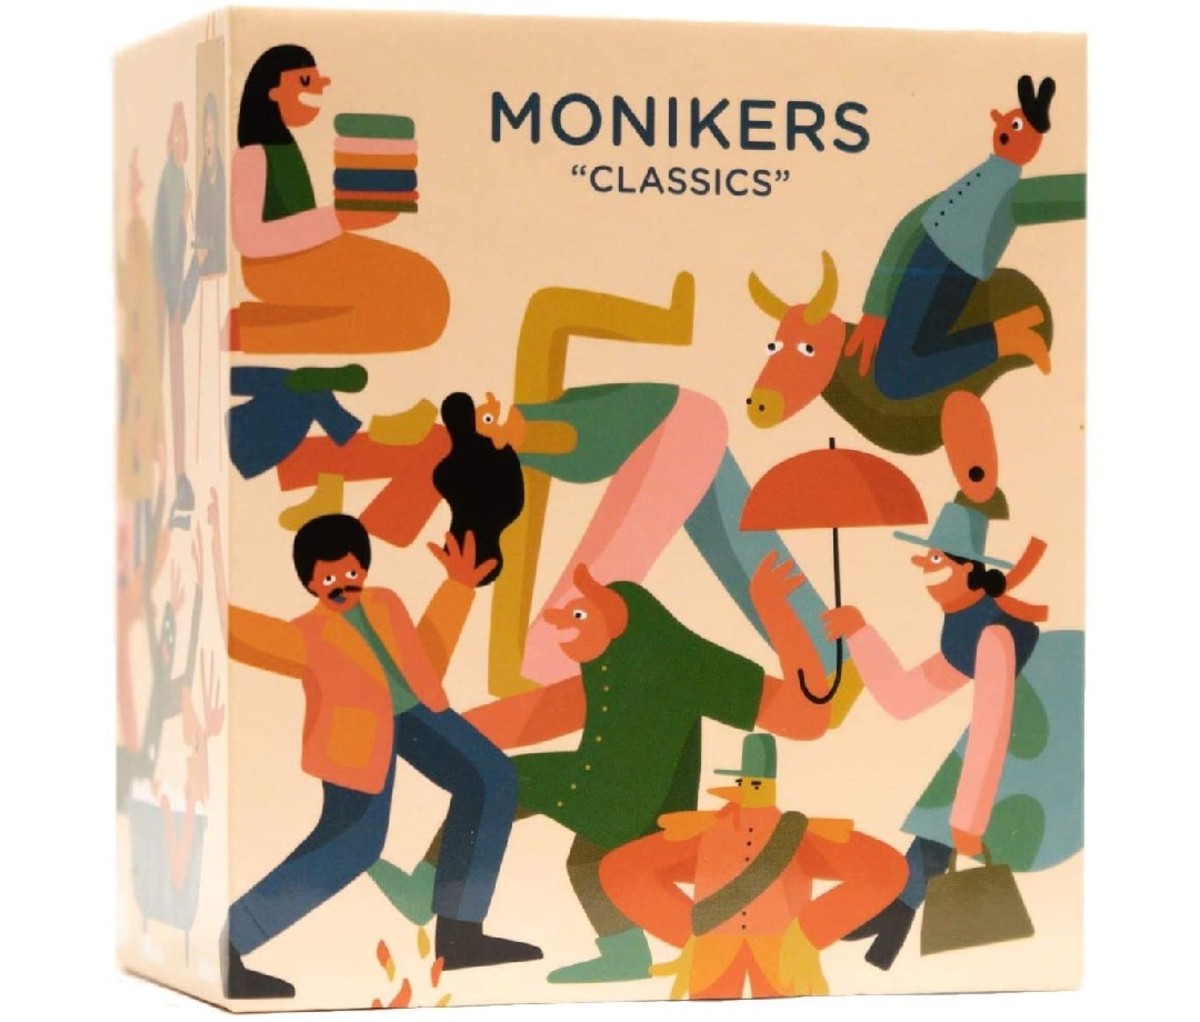 The Monikers: Classics boardgame.